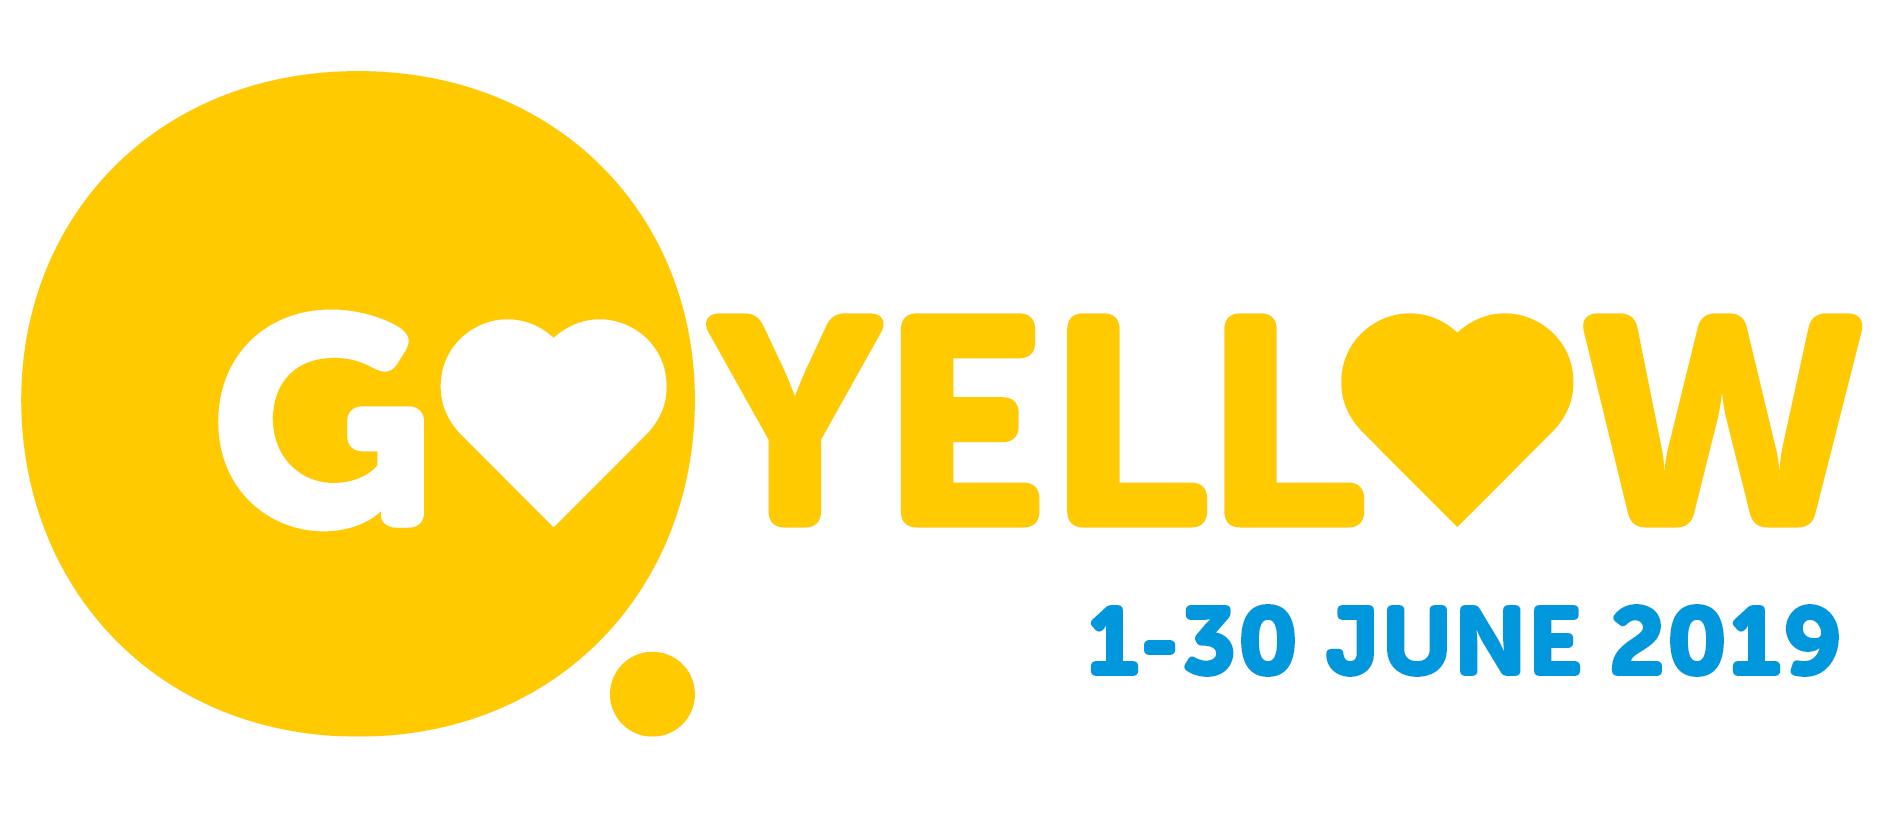 Orange and Yellow Logo - go yellow logo 2019 | St Barnabas Hospice